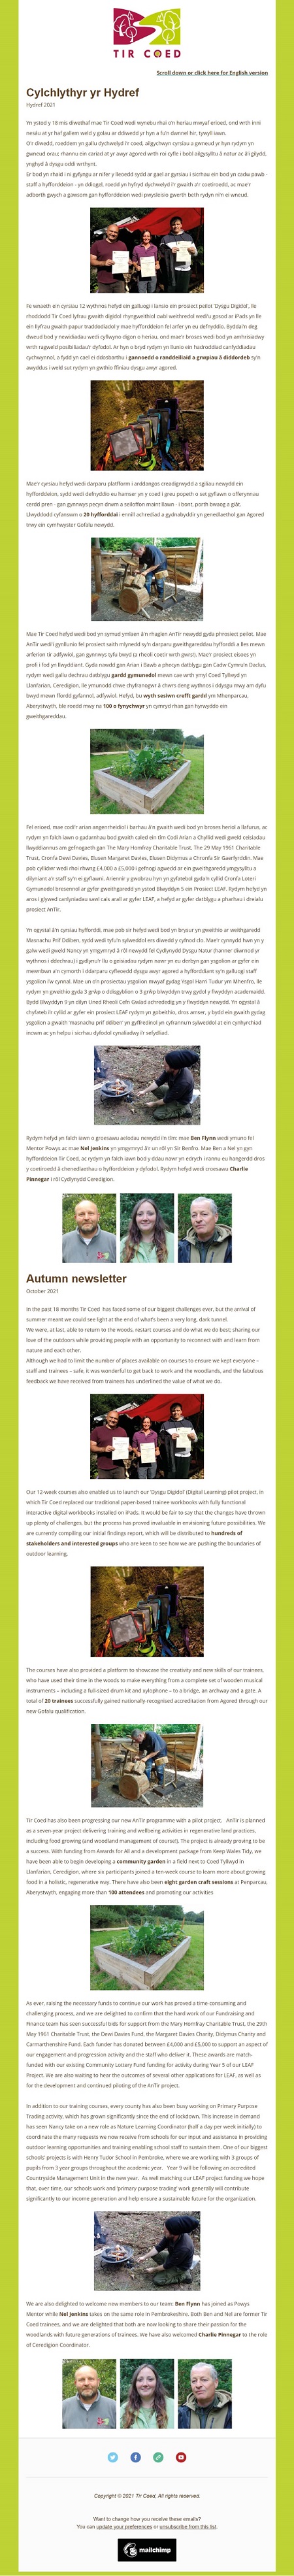 Cylchlythyr Hydref Tir Coed Autumn Newsletter